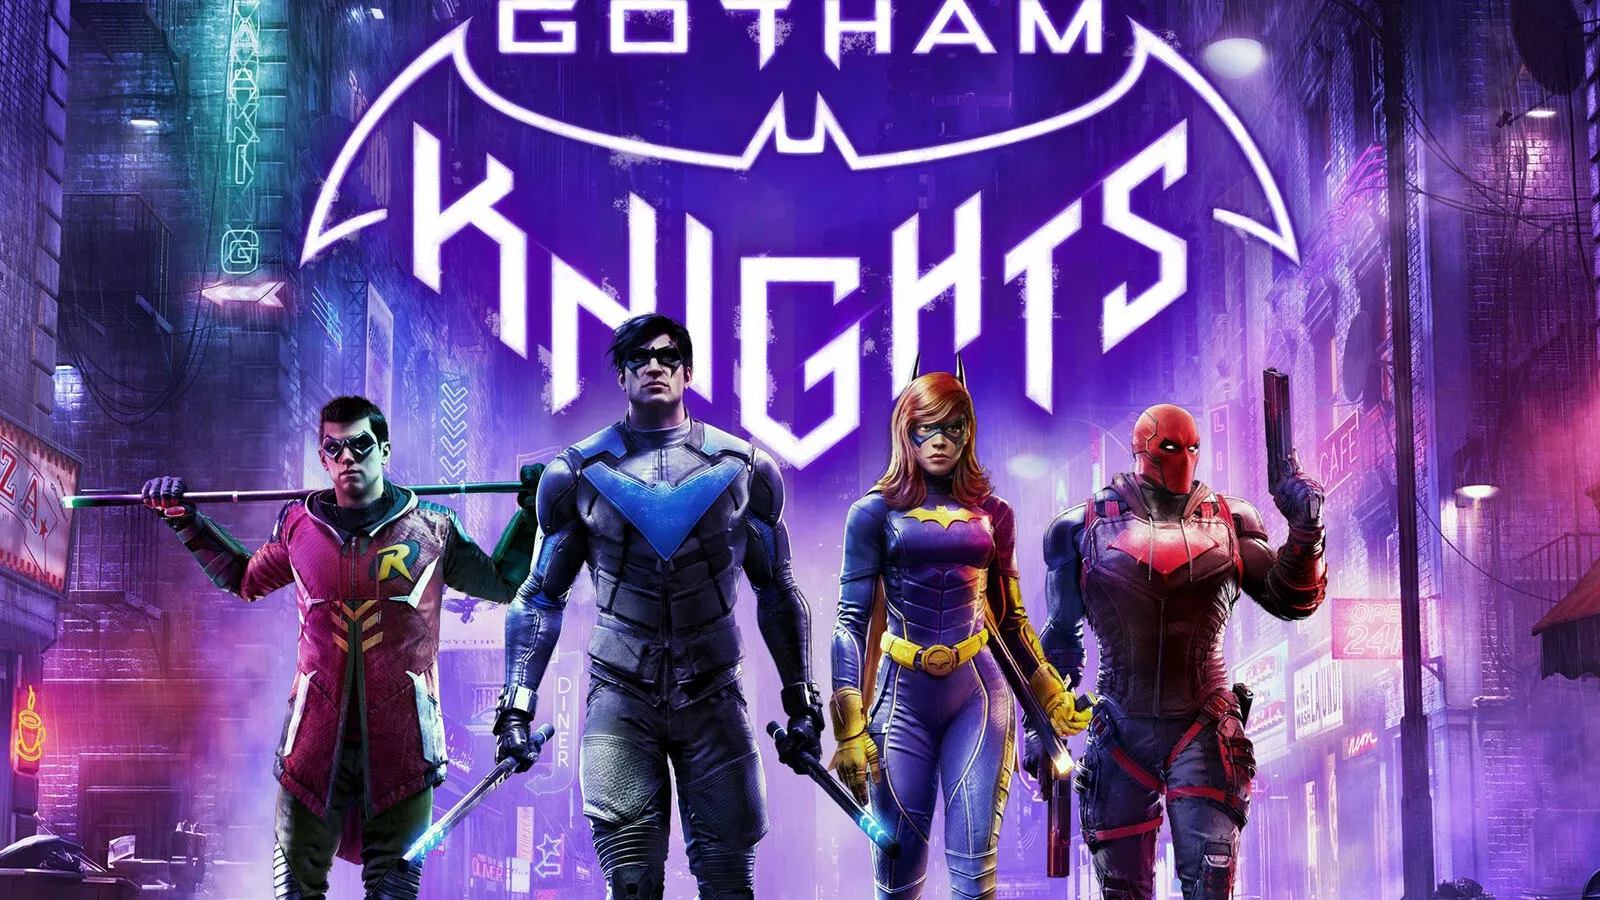 gotham knights releasedatum laatste pre orders trailer gameplay en meer geruchtenf1649944223